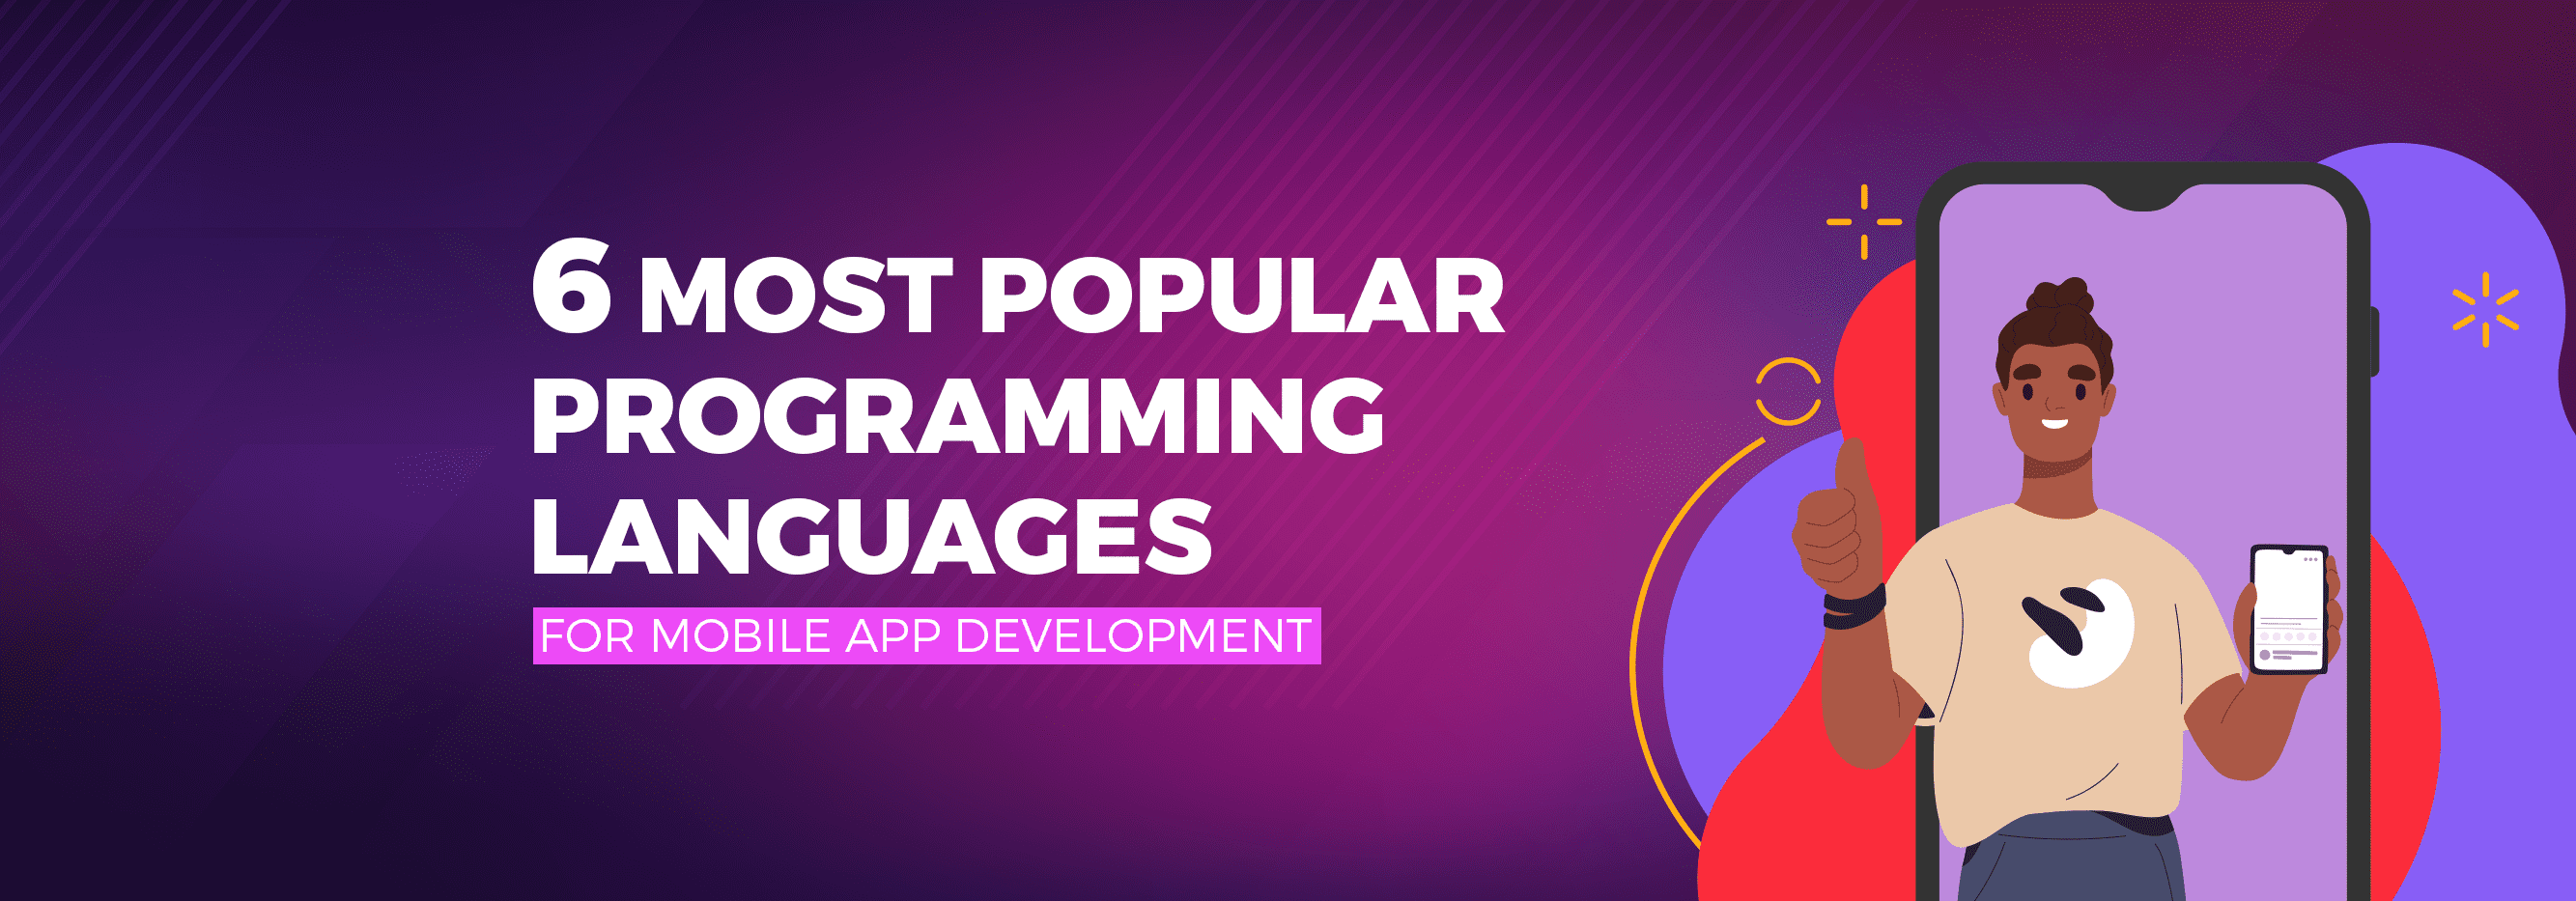 6 Most Popular Programming Languages For Mobile App Development_banner